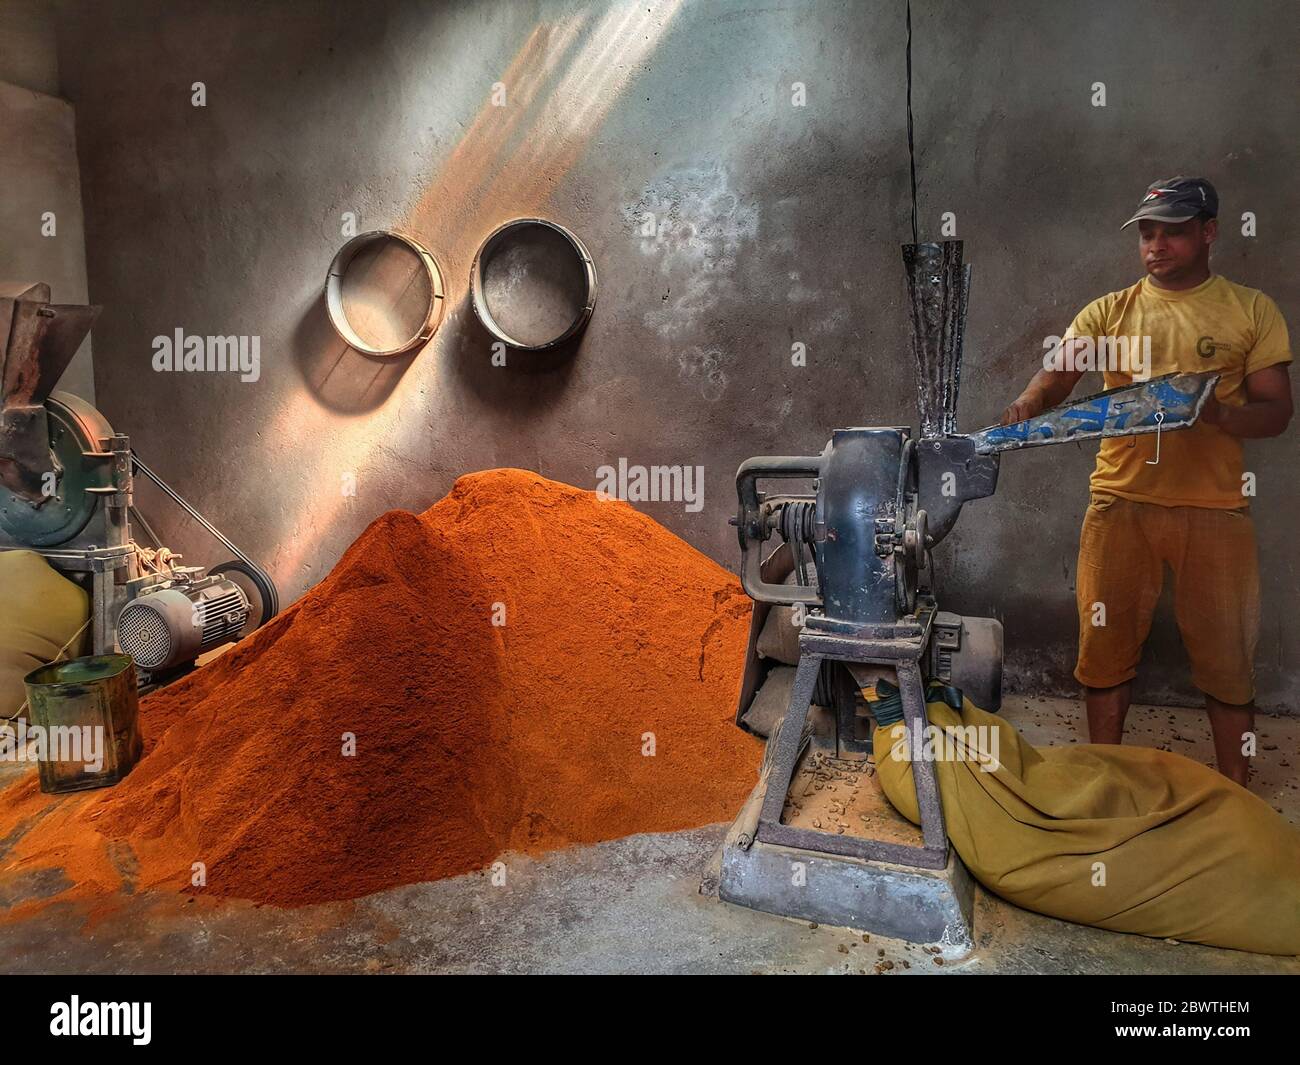 Kathmandu, Nepal. 3rd June, 2020. A man prepares turmeric powder at a mill during nationwide lockdown amid COVID-19 outbreak in Kathmandu, capital of Nepal on June 3, 2020. Credit: Sunil Sharma/ZUMA Wire/Alamy Live News Stock Photo